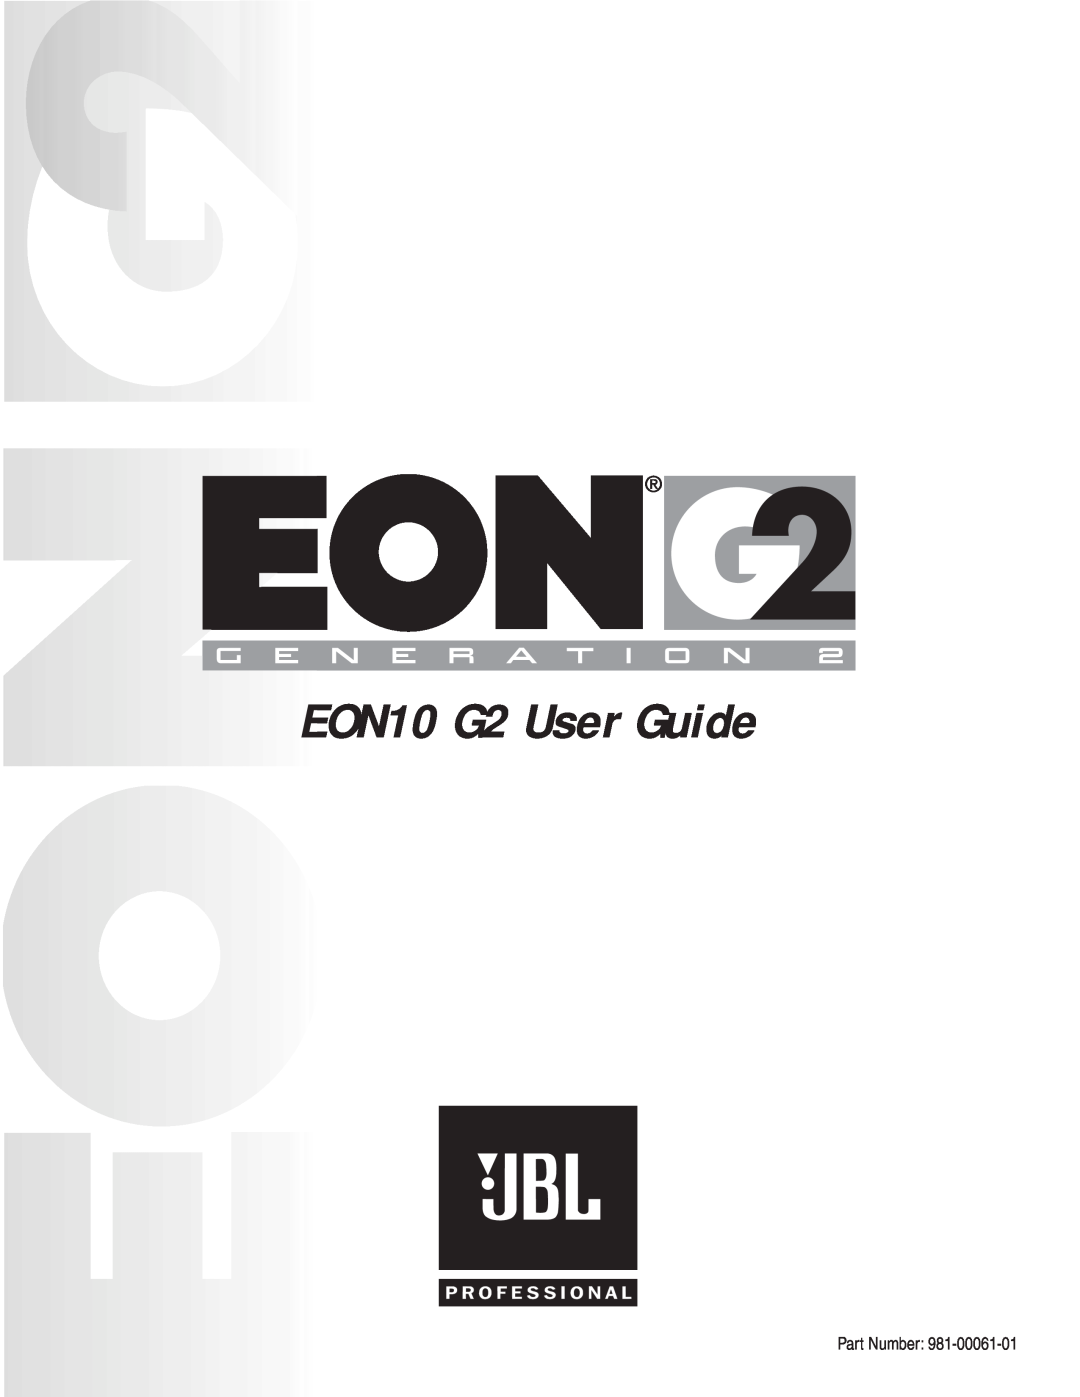 JBL Professional manual EON10 G2 User Guide, Part Number 